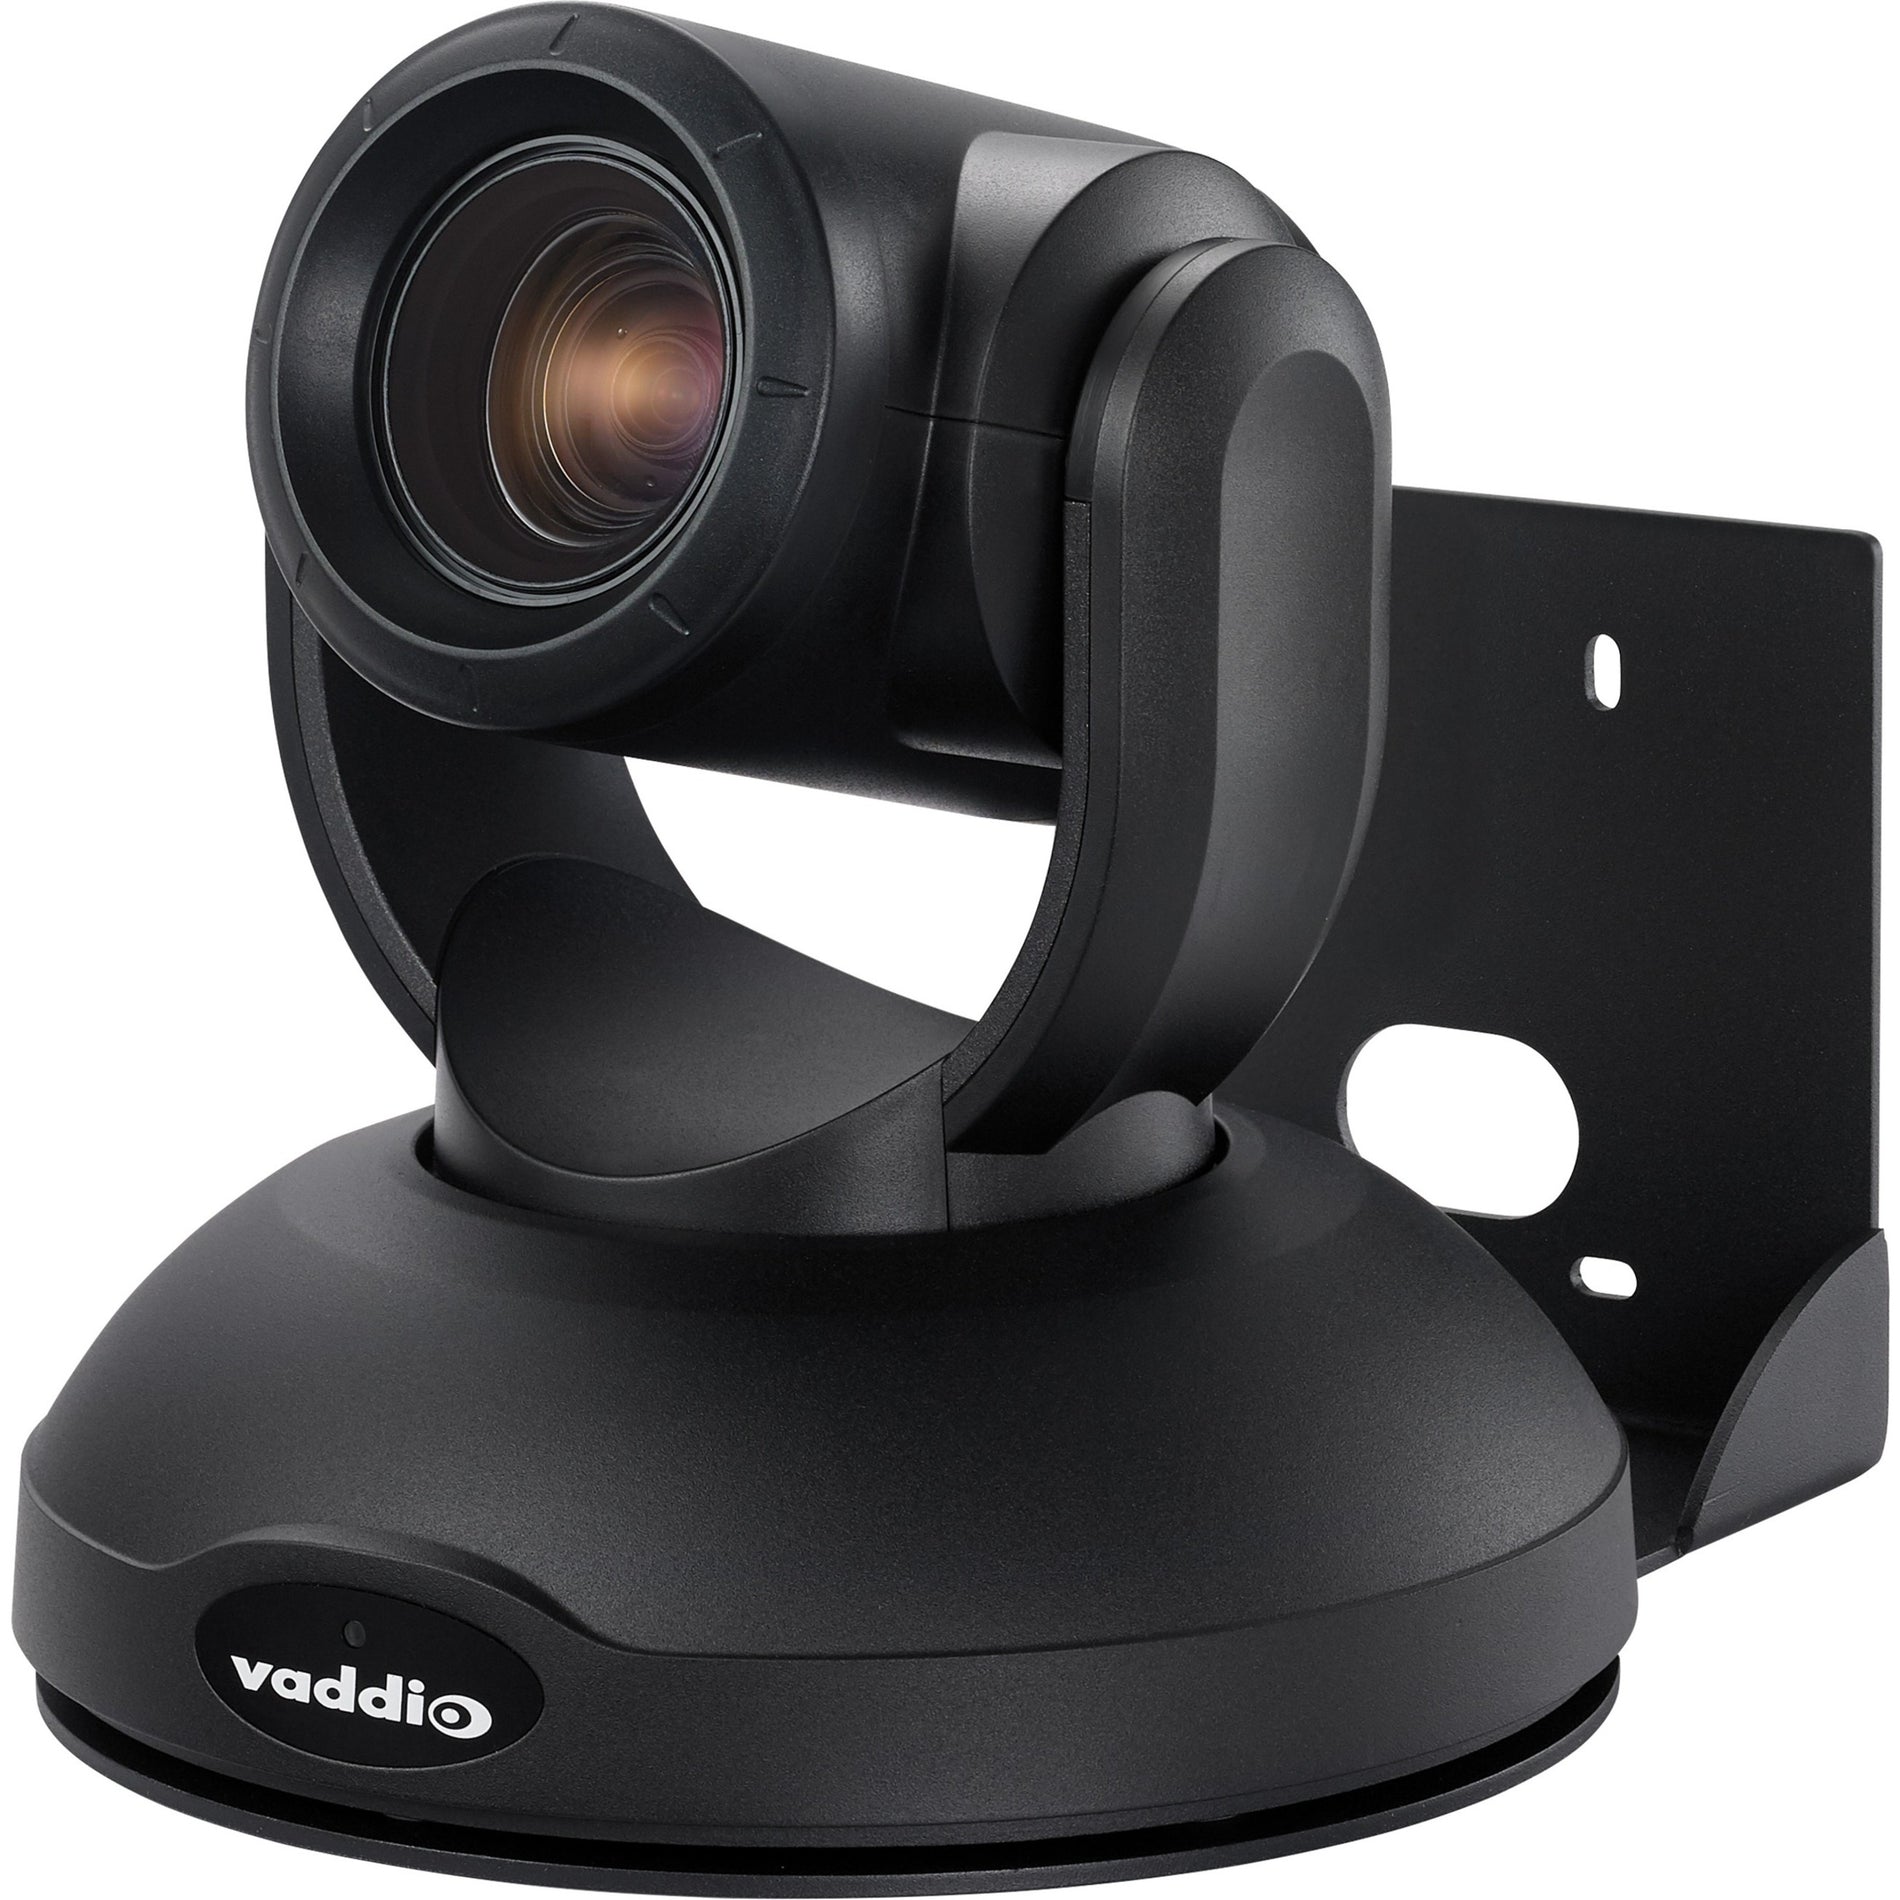 Vaddio 999-9950-100B RoboSHOT 20 UHD OneLINK HDMI PTZ Camera System, 4K UHD, 3-Year Warranty